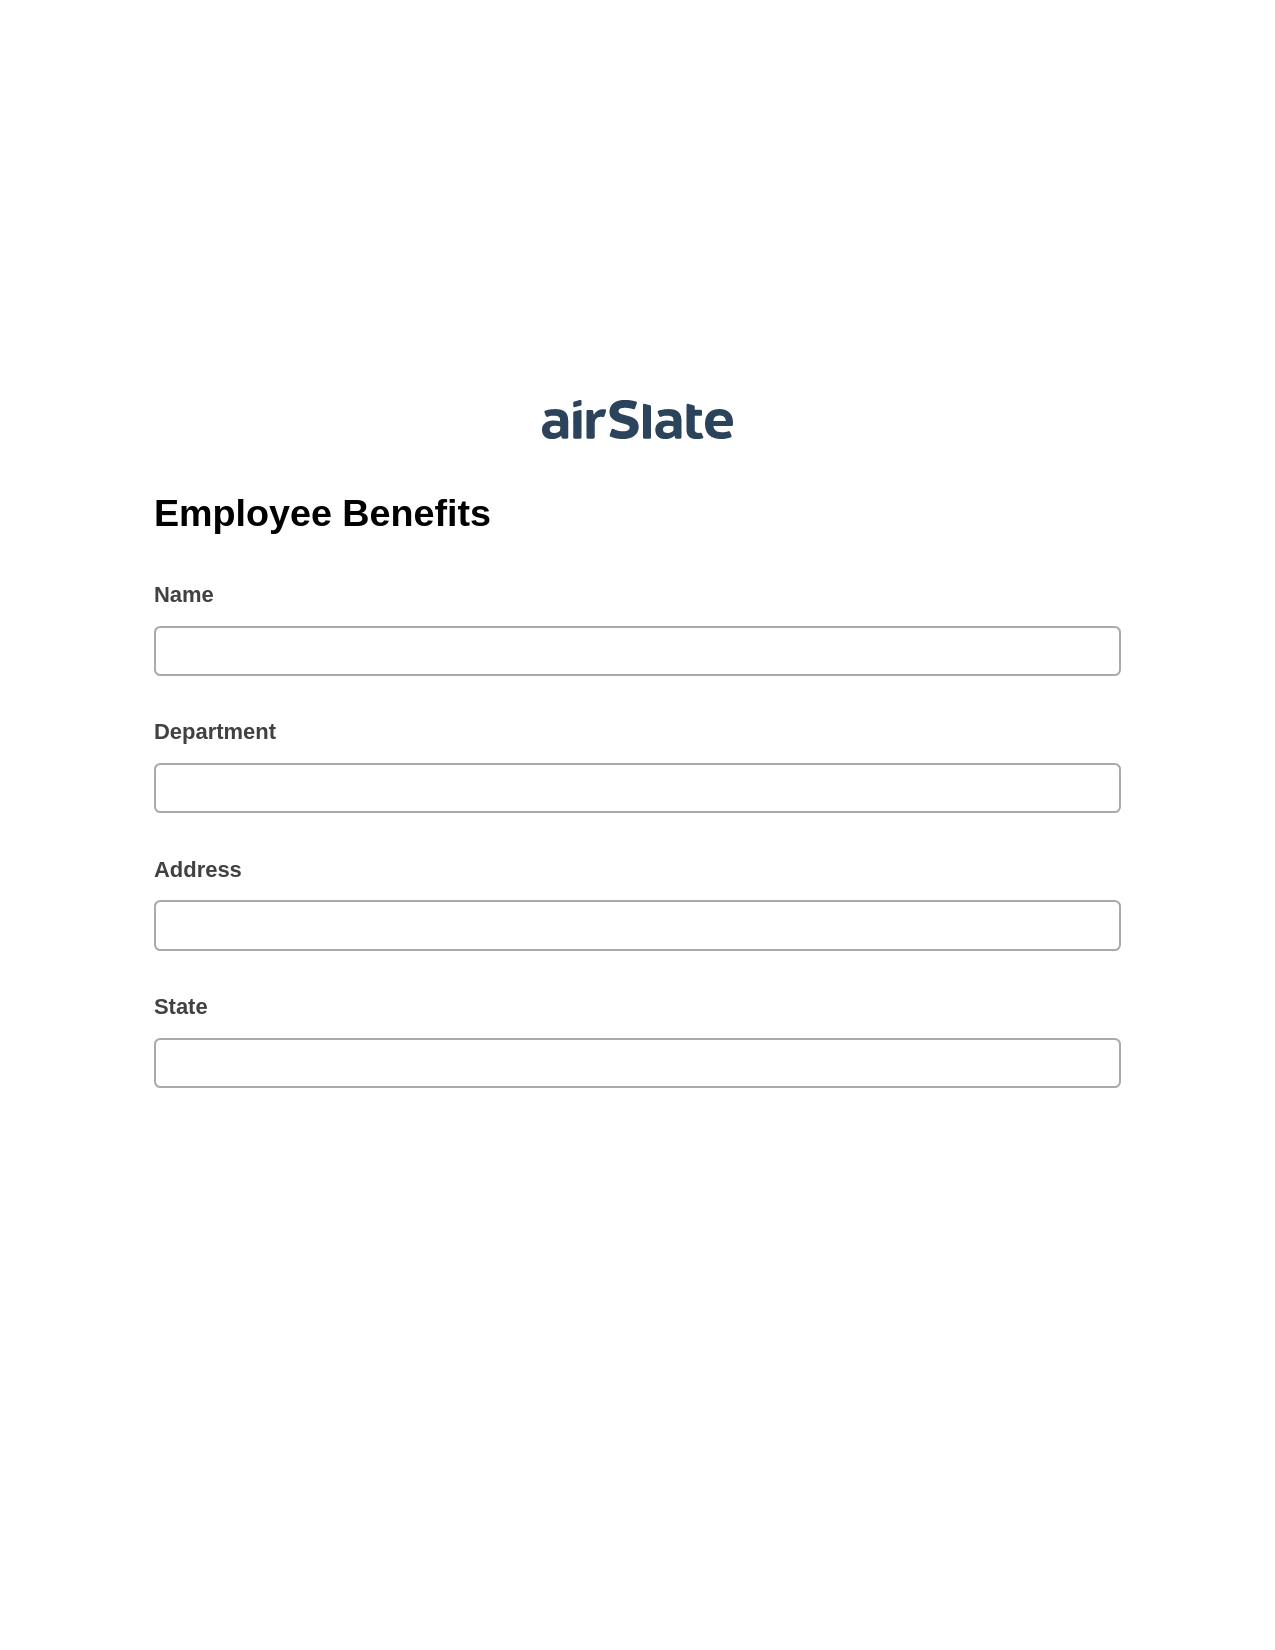 Employee Benefits Pre-fill Document Bot, Reminder Bot, Box Bot